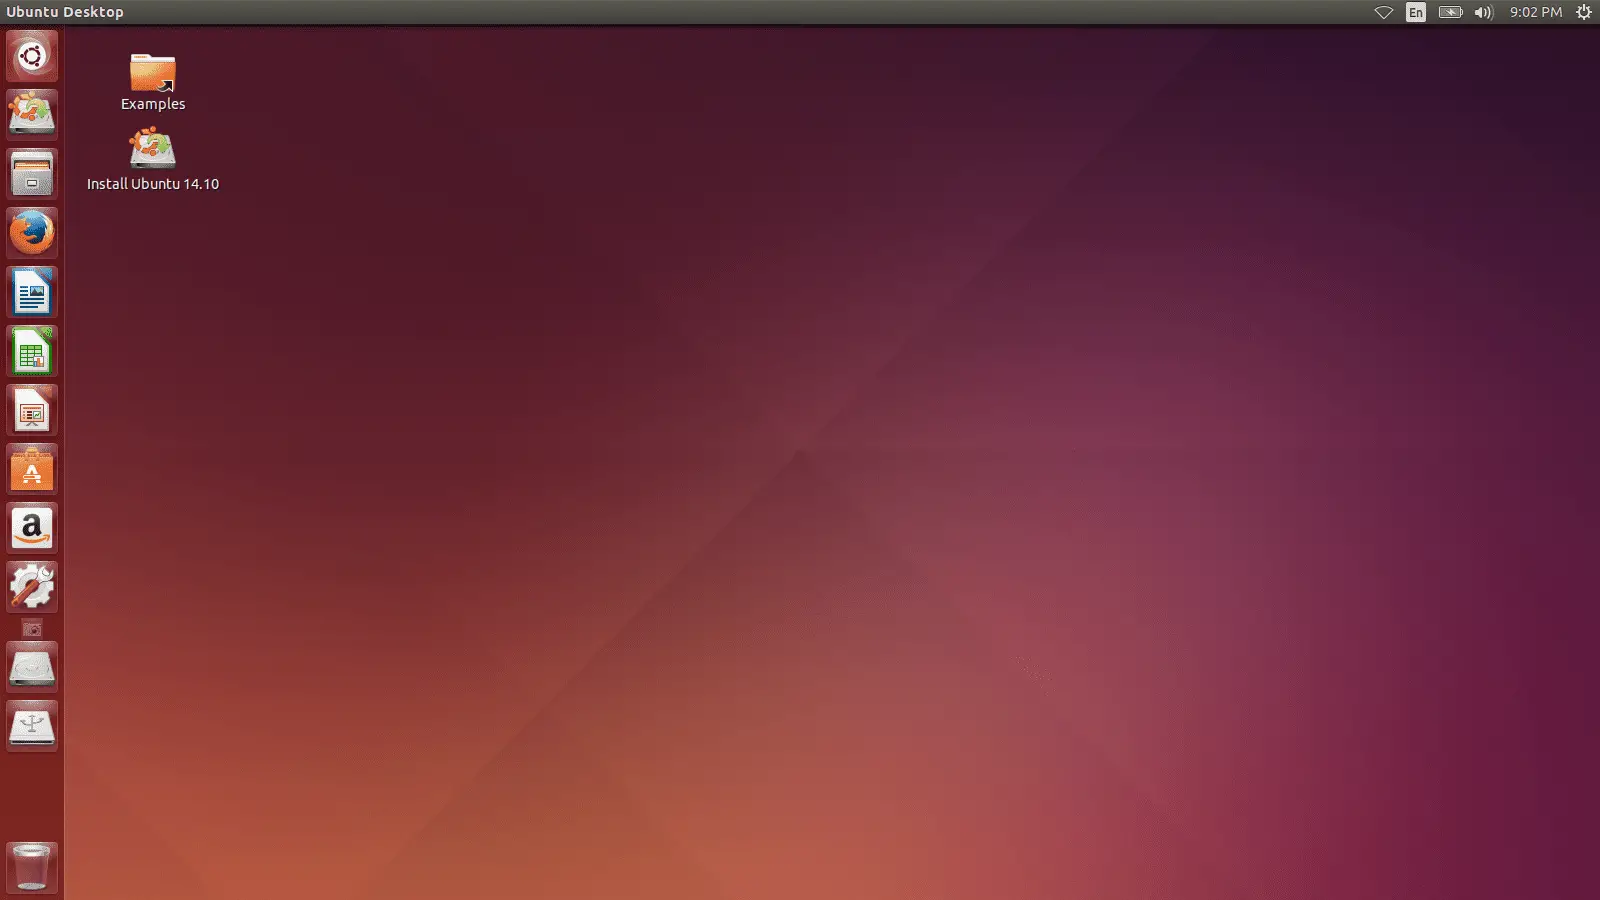 Ubuntu Live Desktop